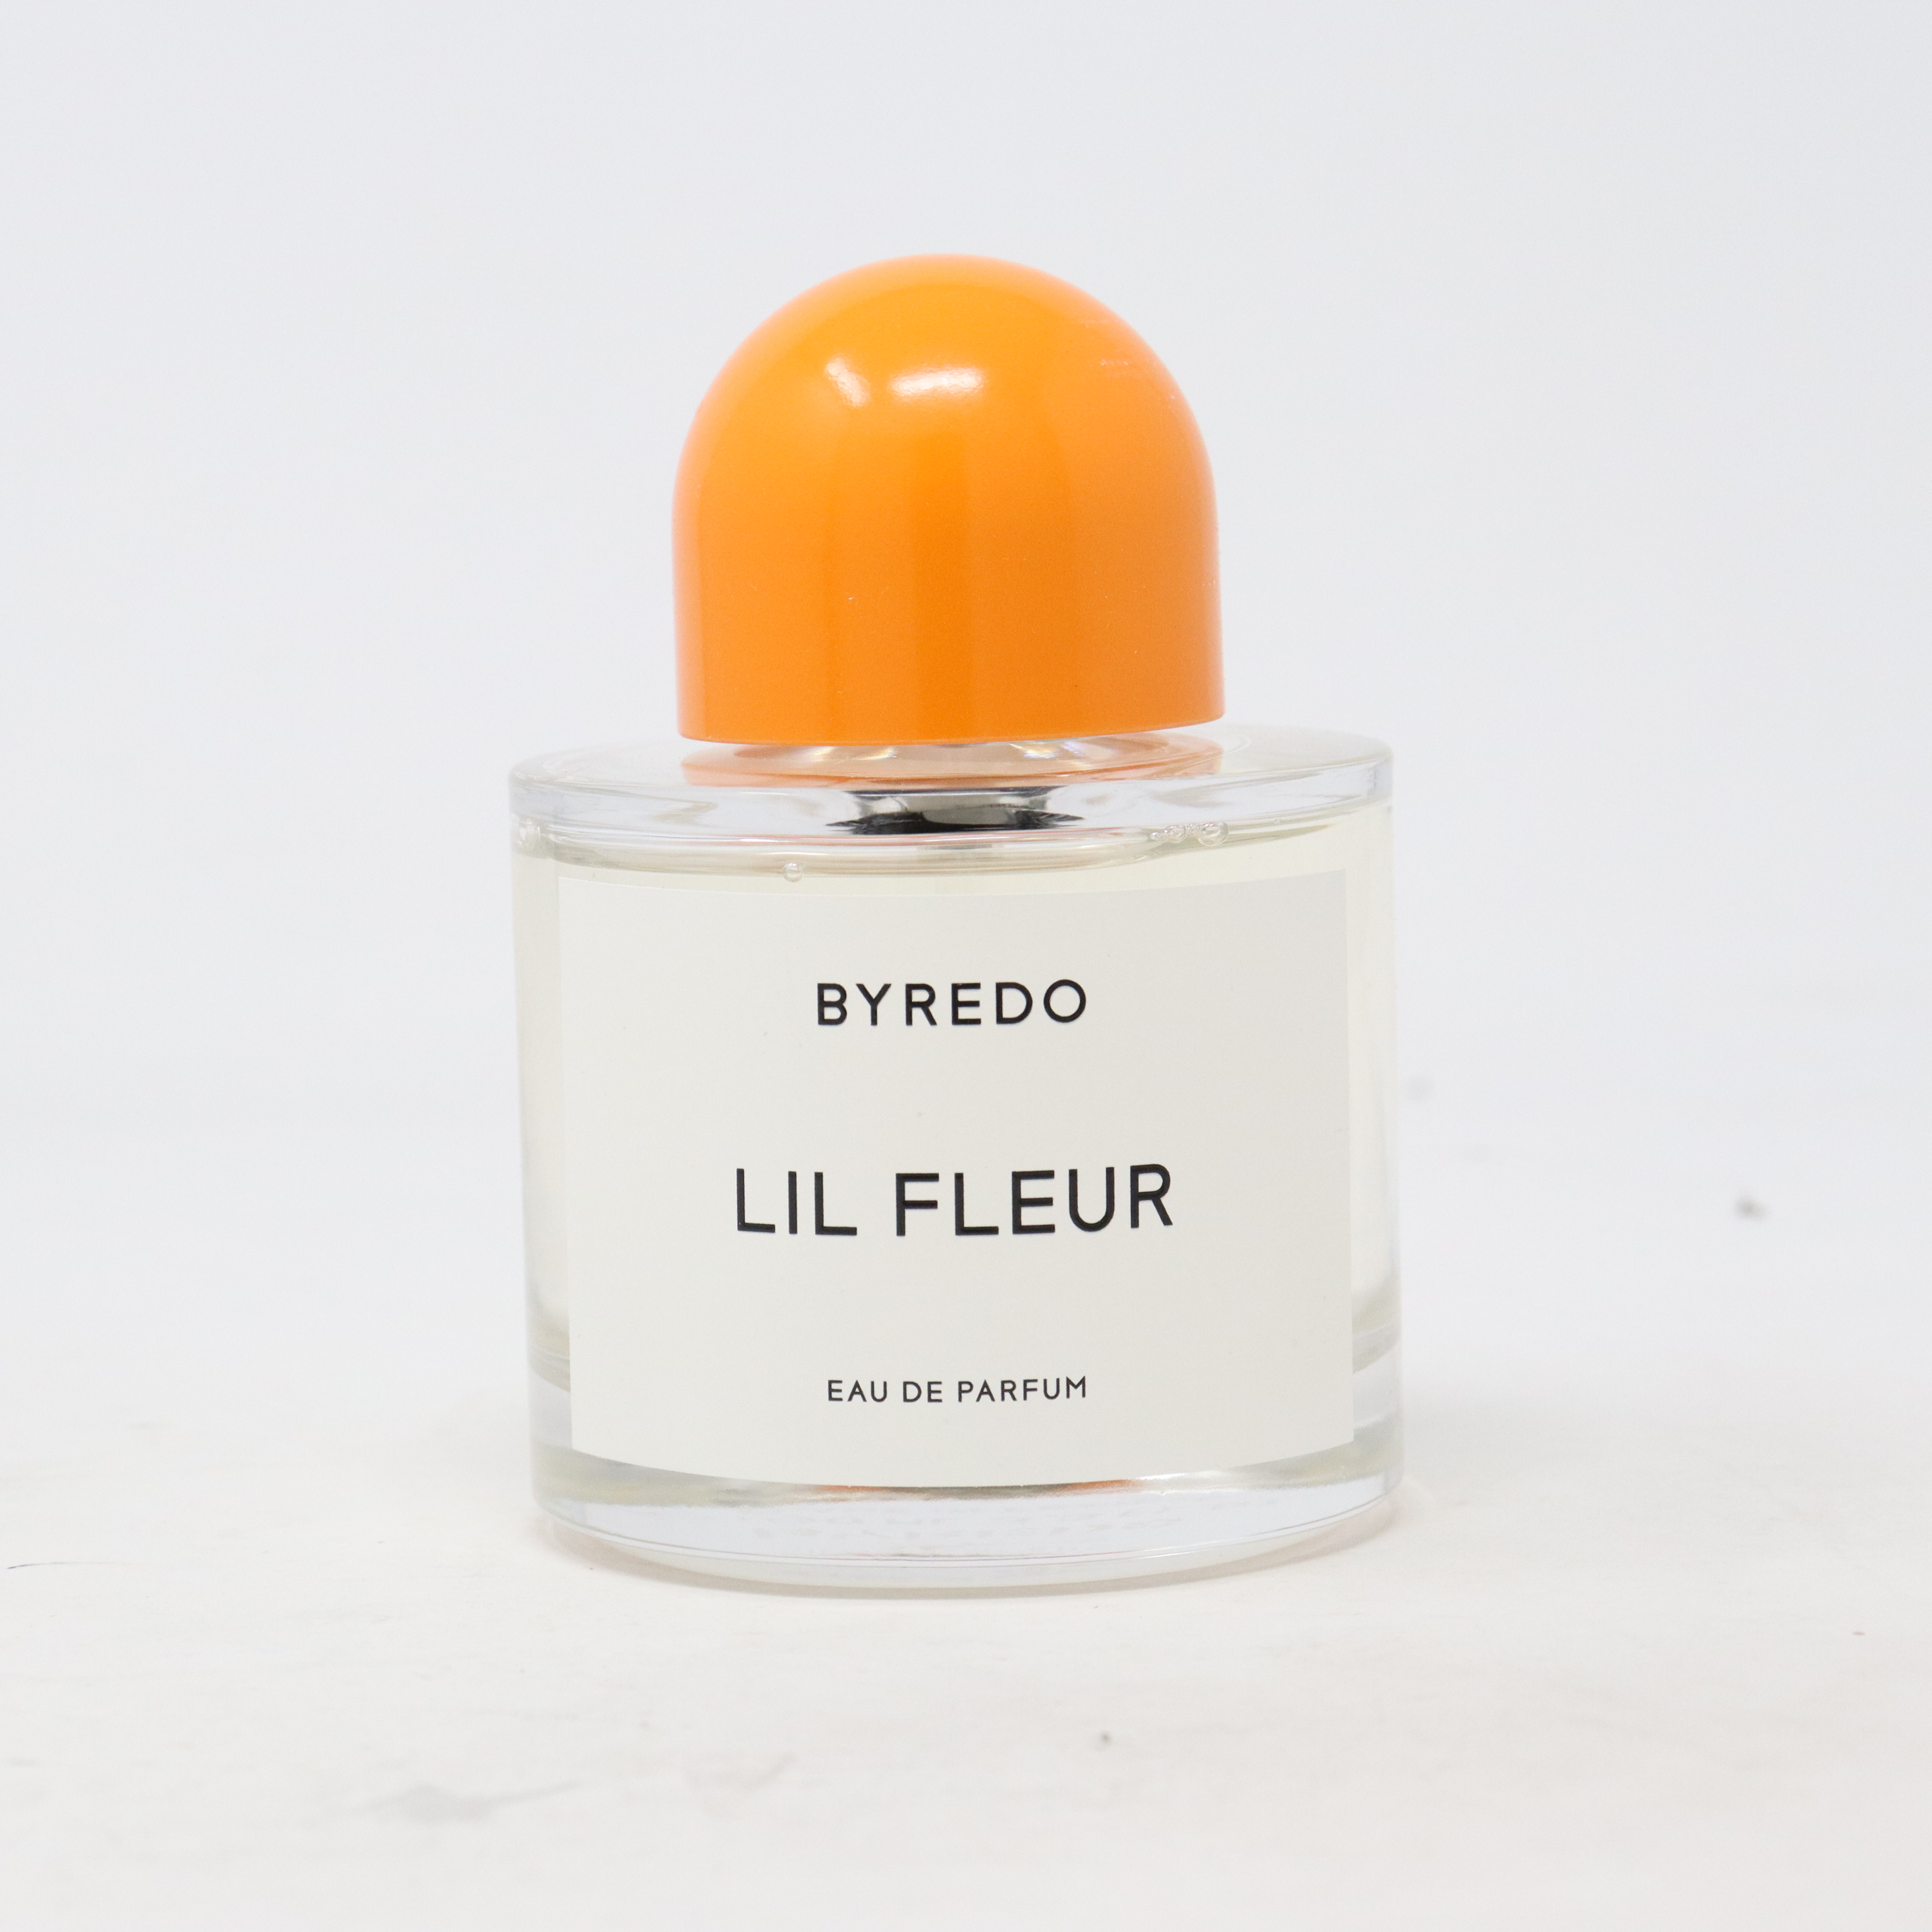 Лил флер. Byredo Lil fleur Limited Edition.